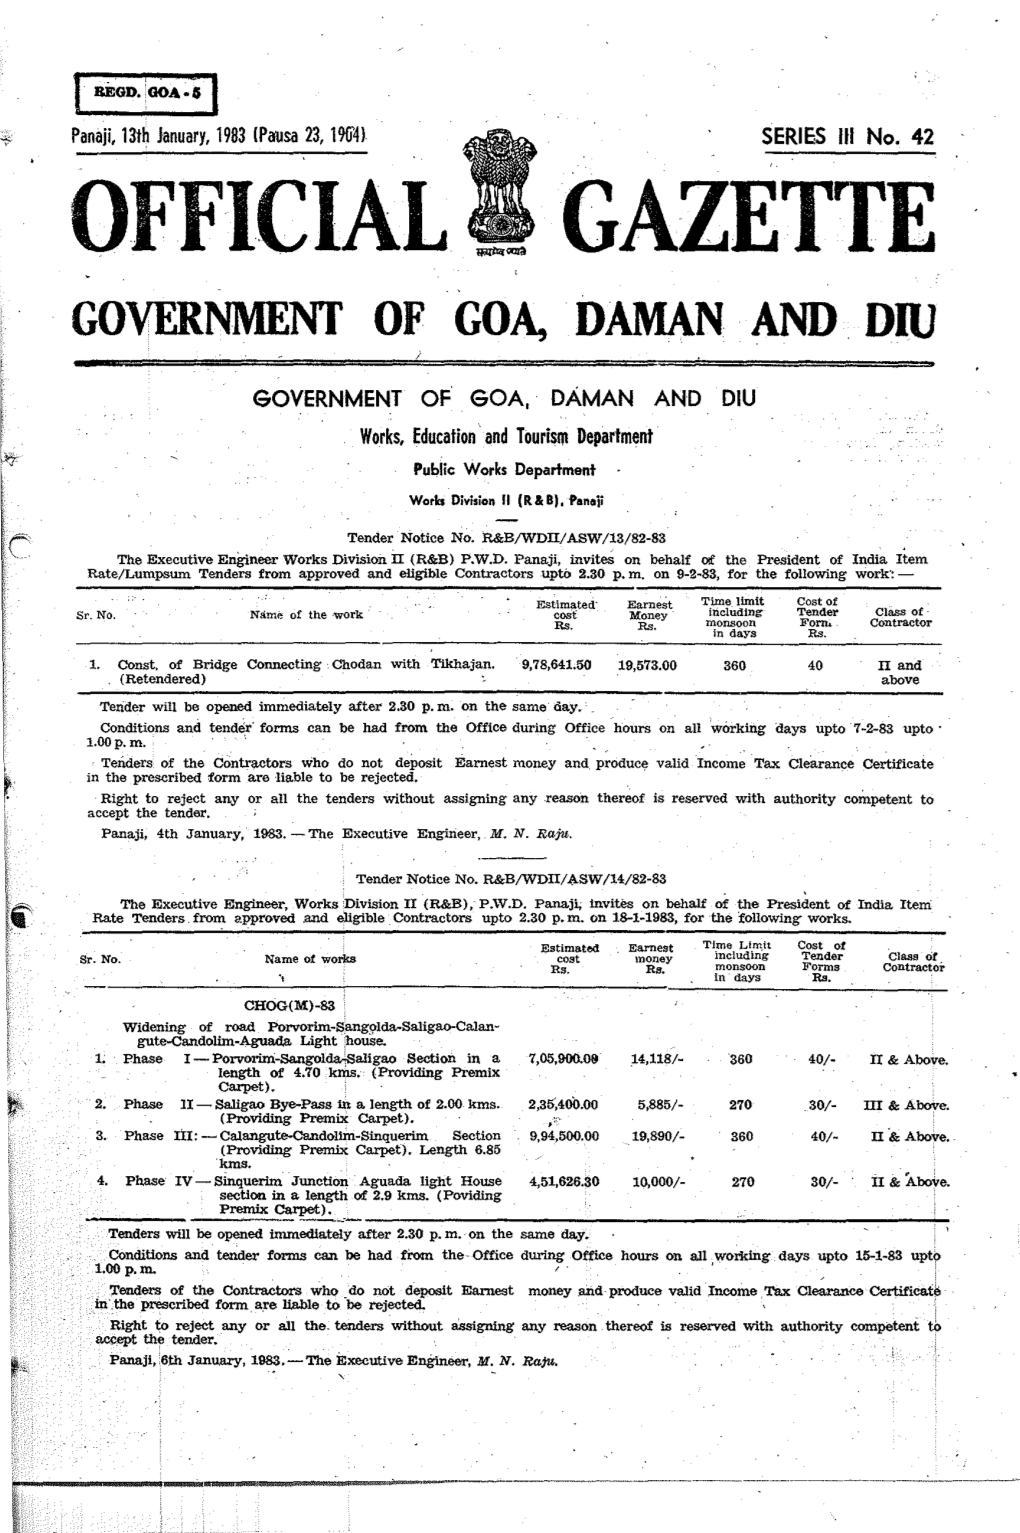 Official Gazette Government of Goa, Daman And